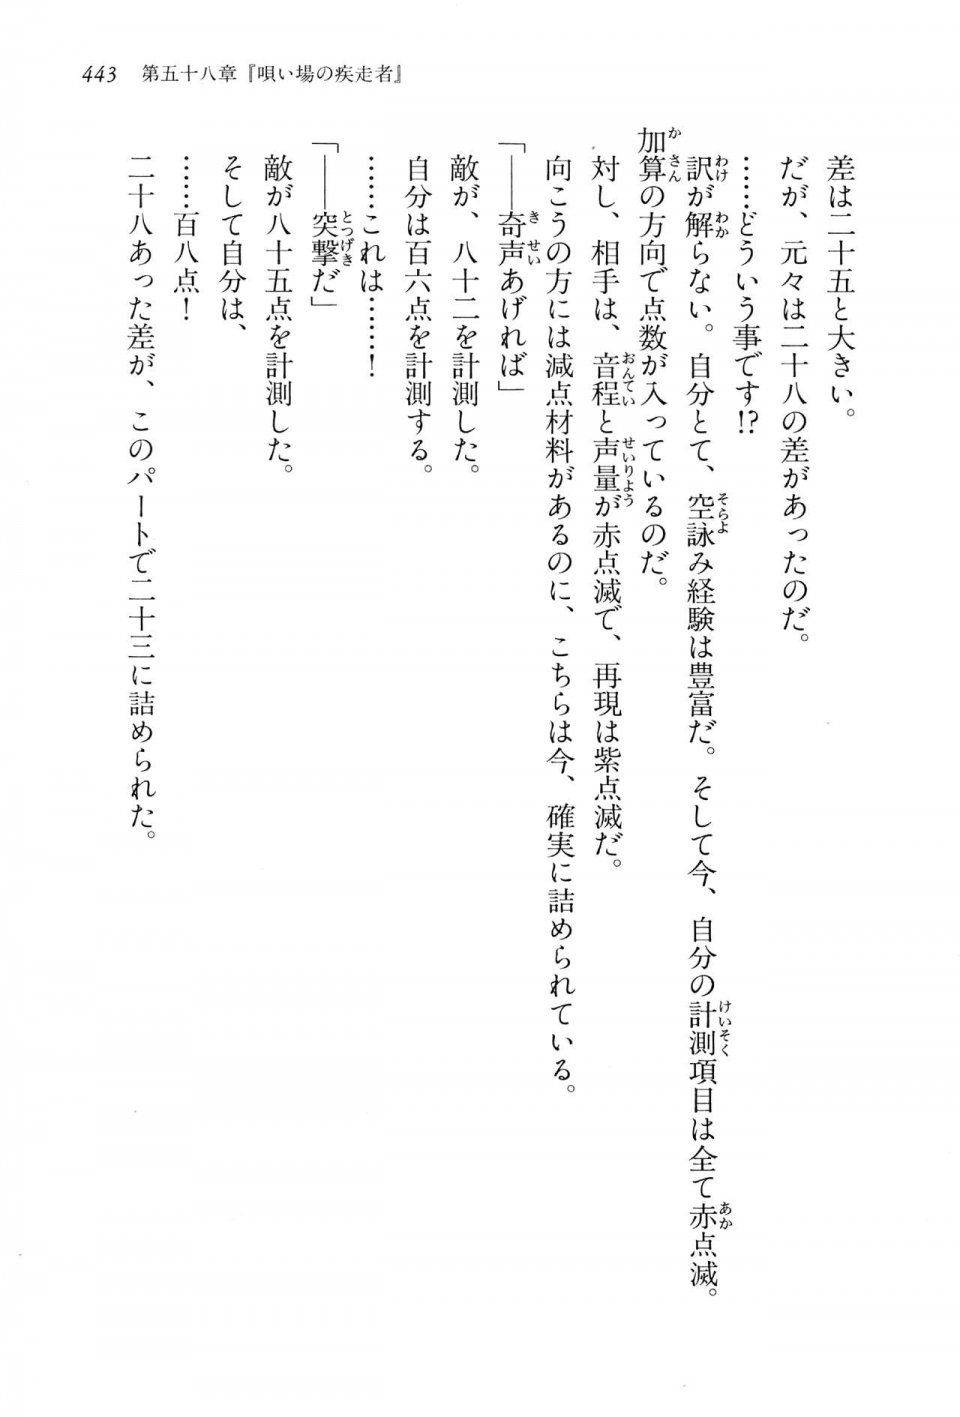 Kyoukai Senjou no Horizon LN Vol 15(6C) Part 1 - Photo #443